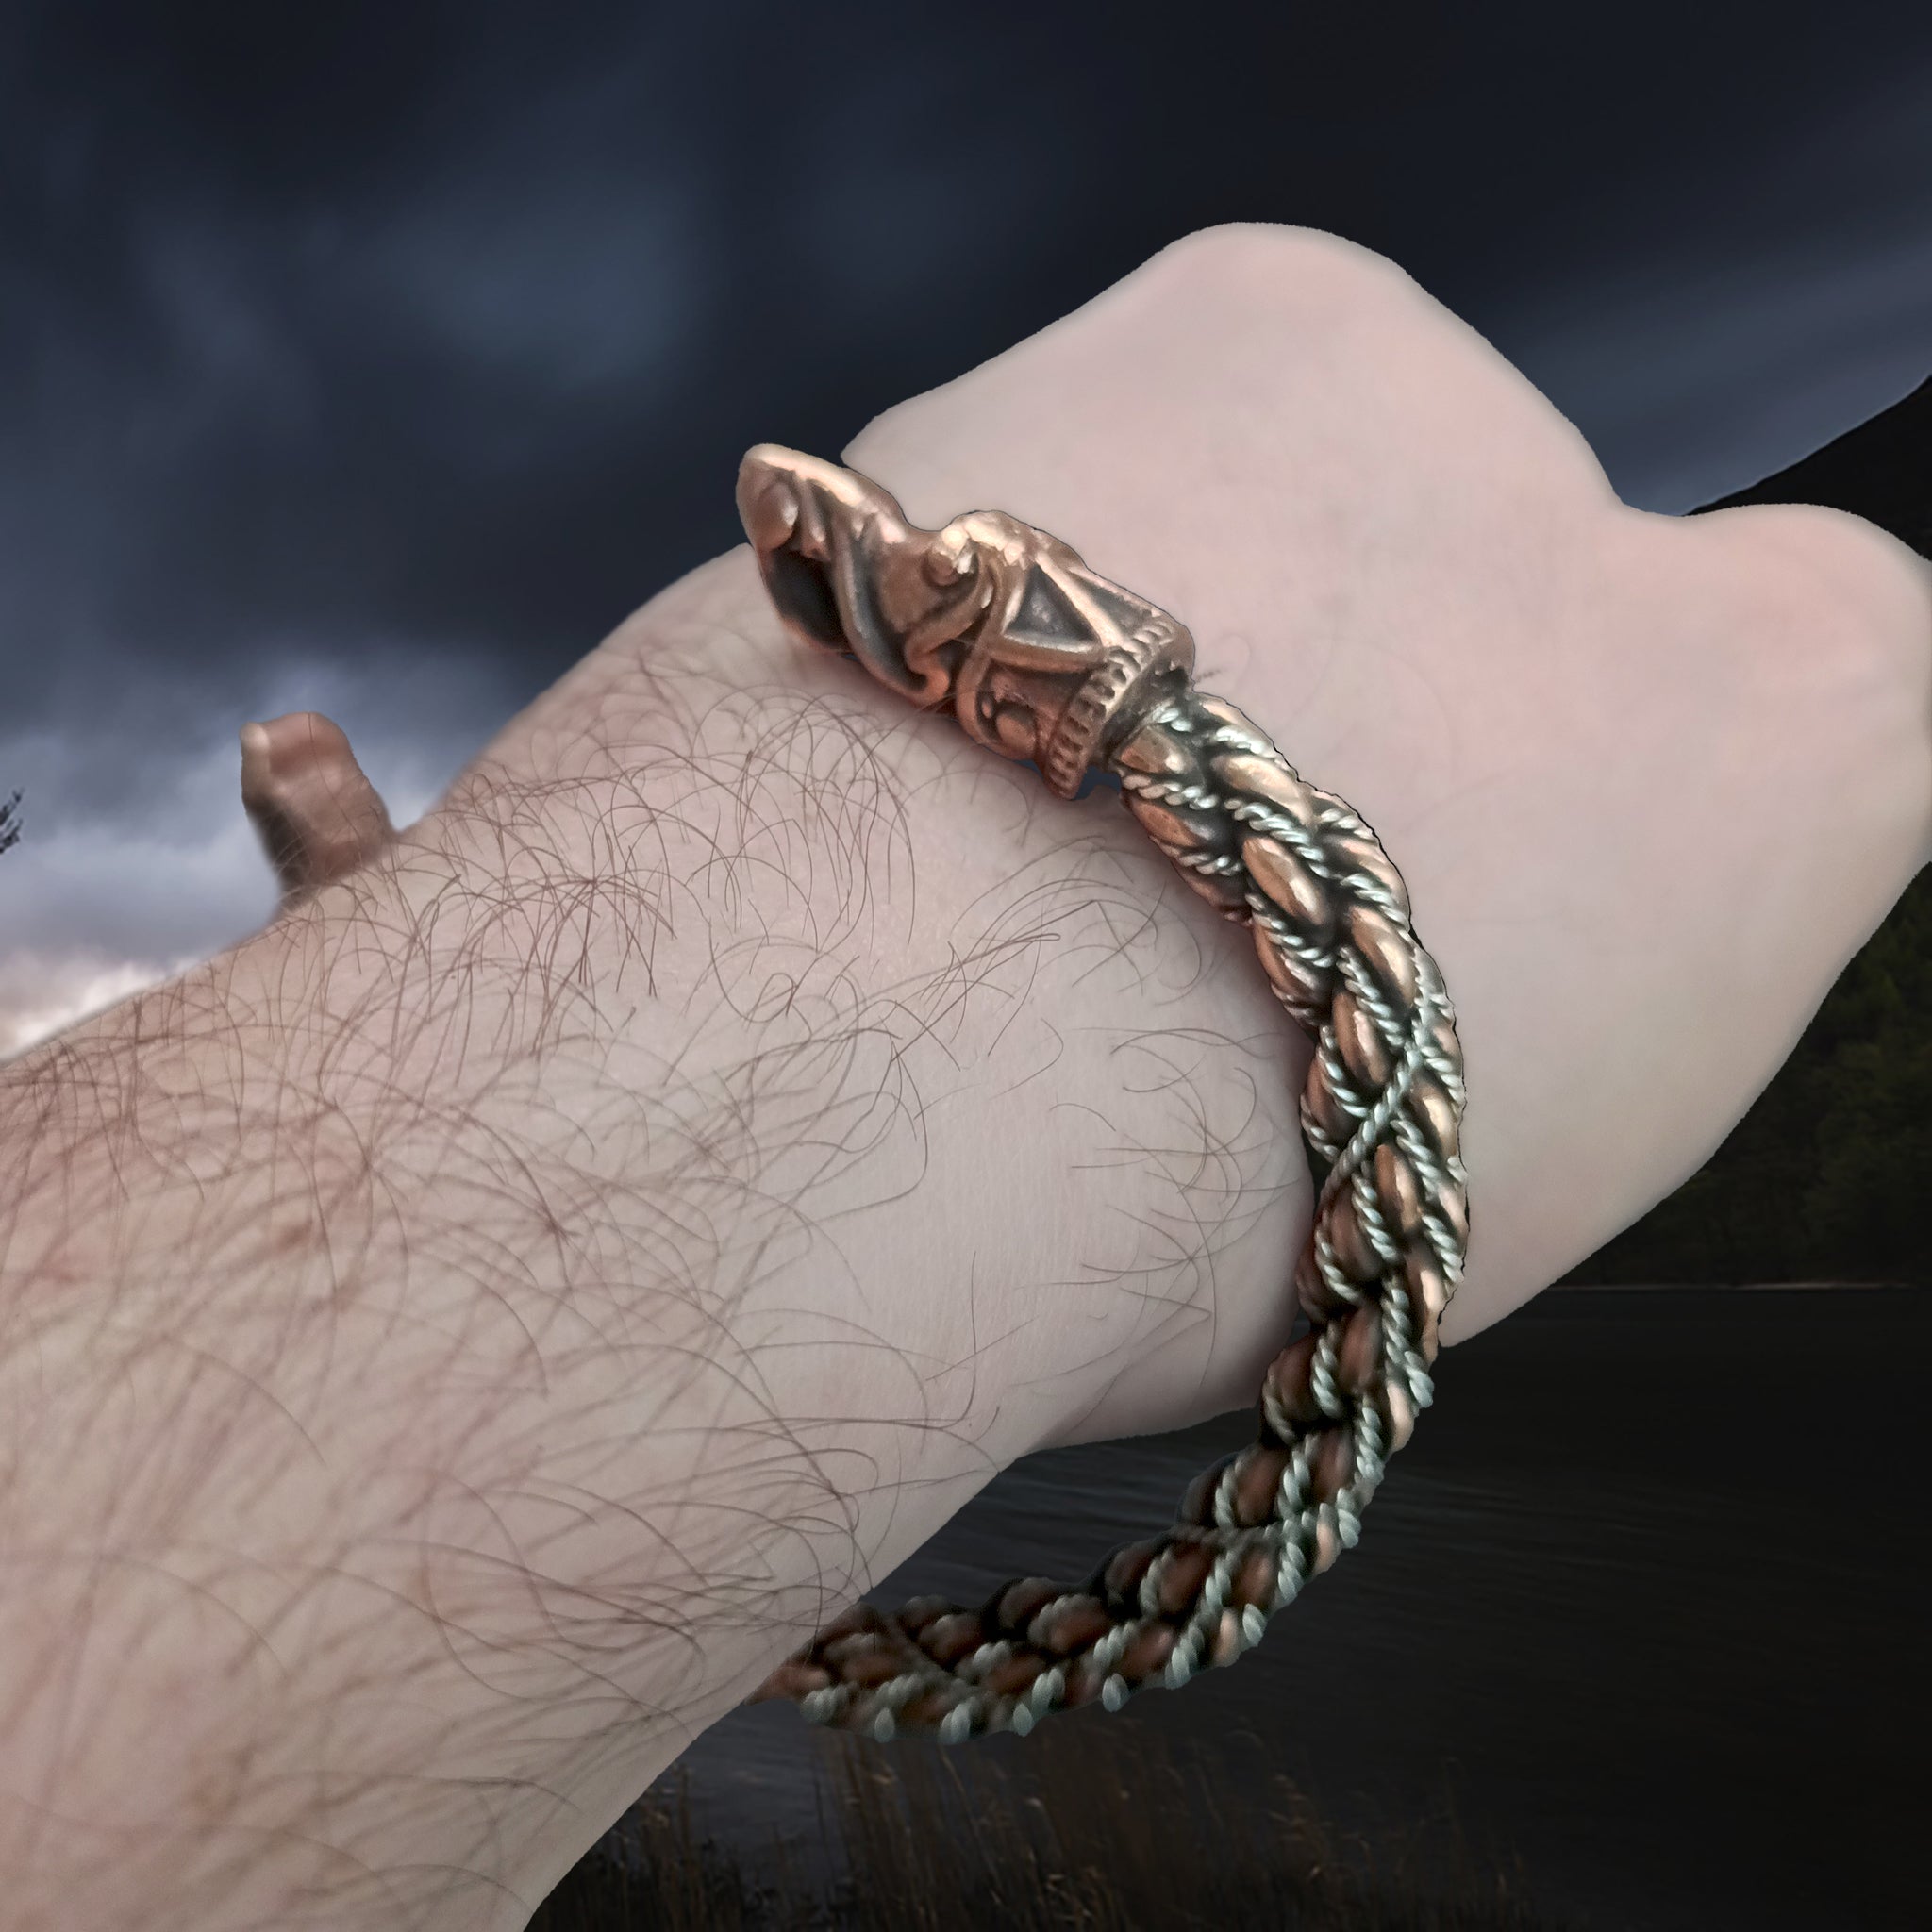 Handmade Twisted Bronze and Silver Arm Ring / Bracelet With Gotlandic Dragon Heads om Wrist